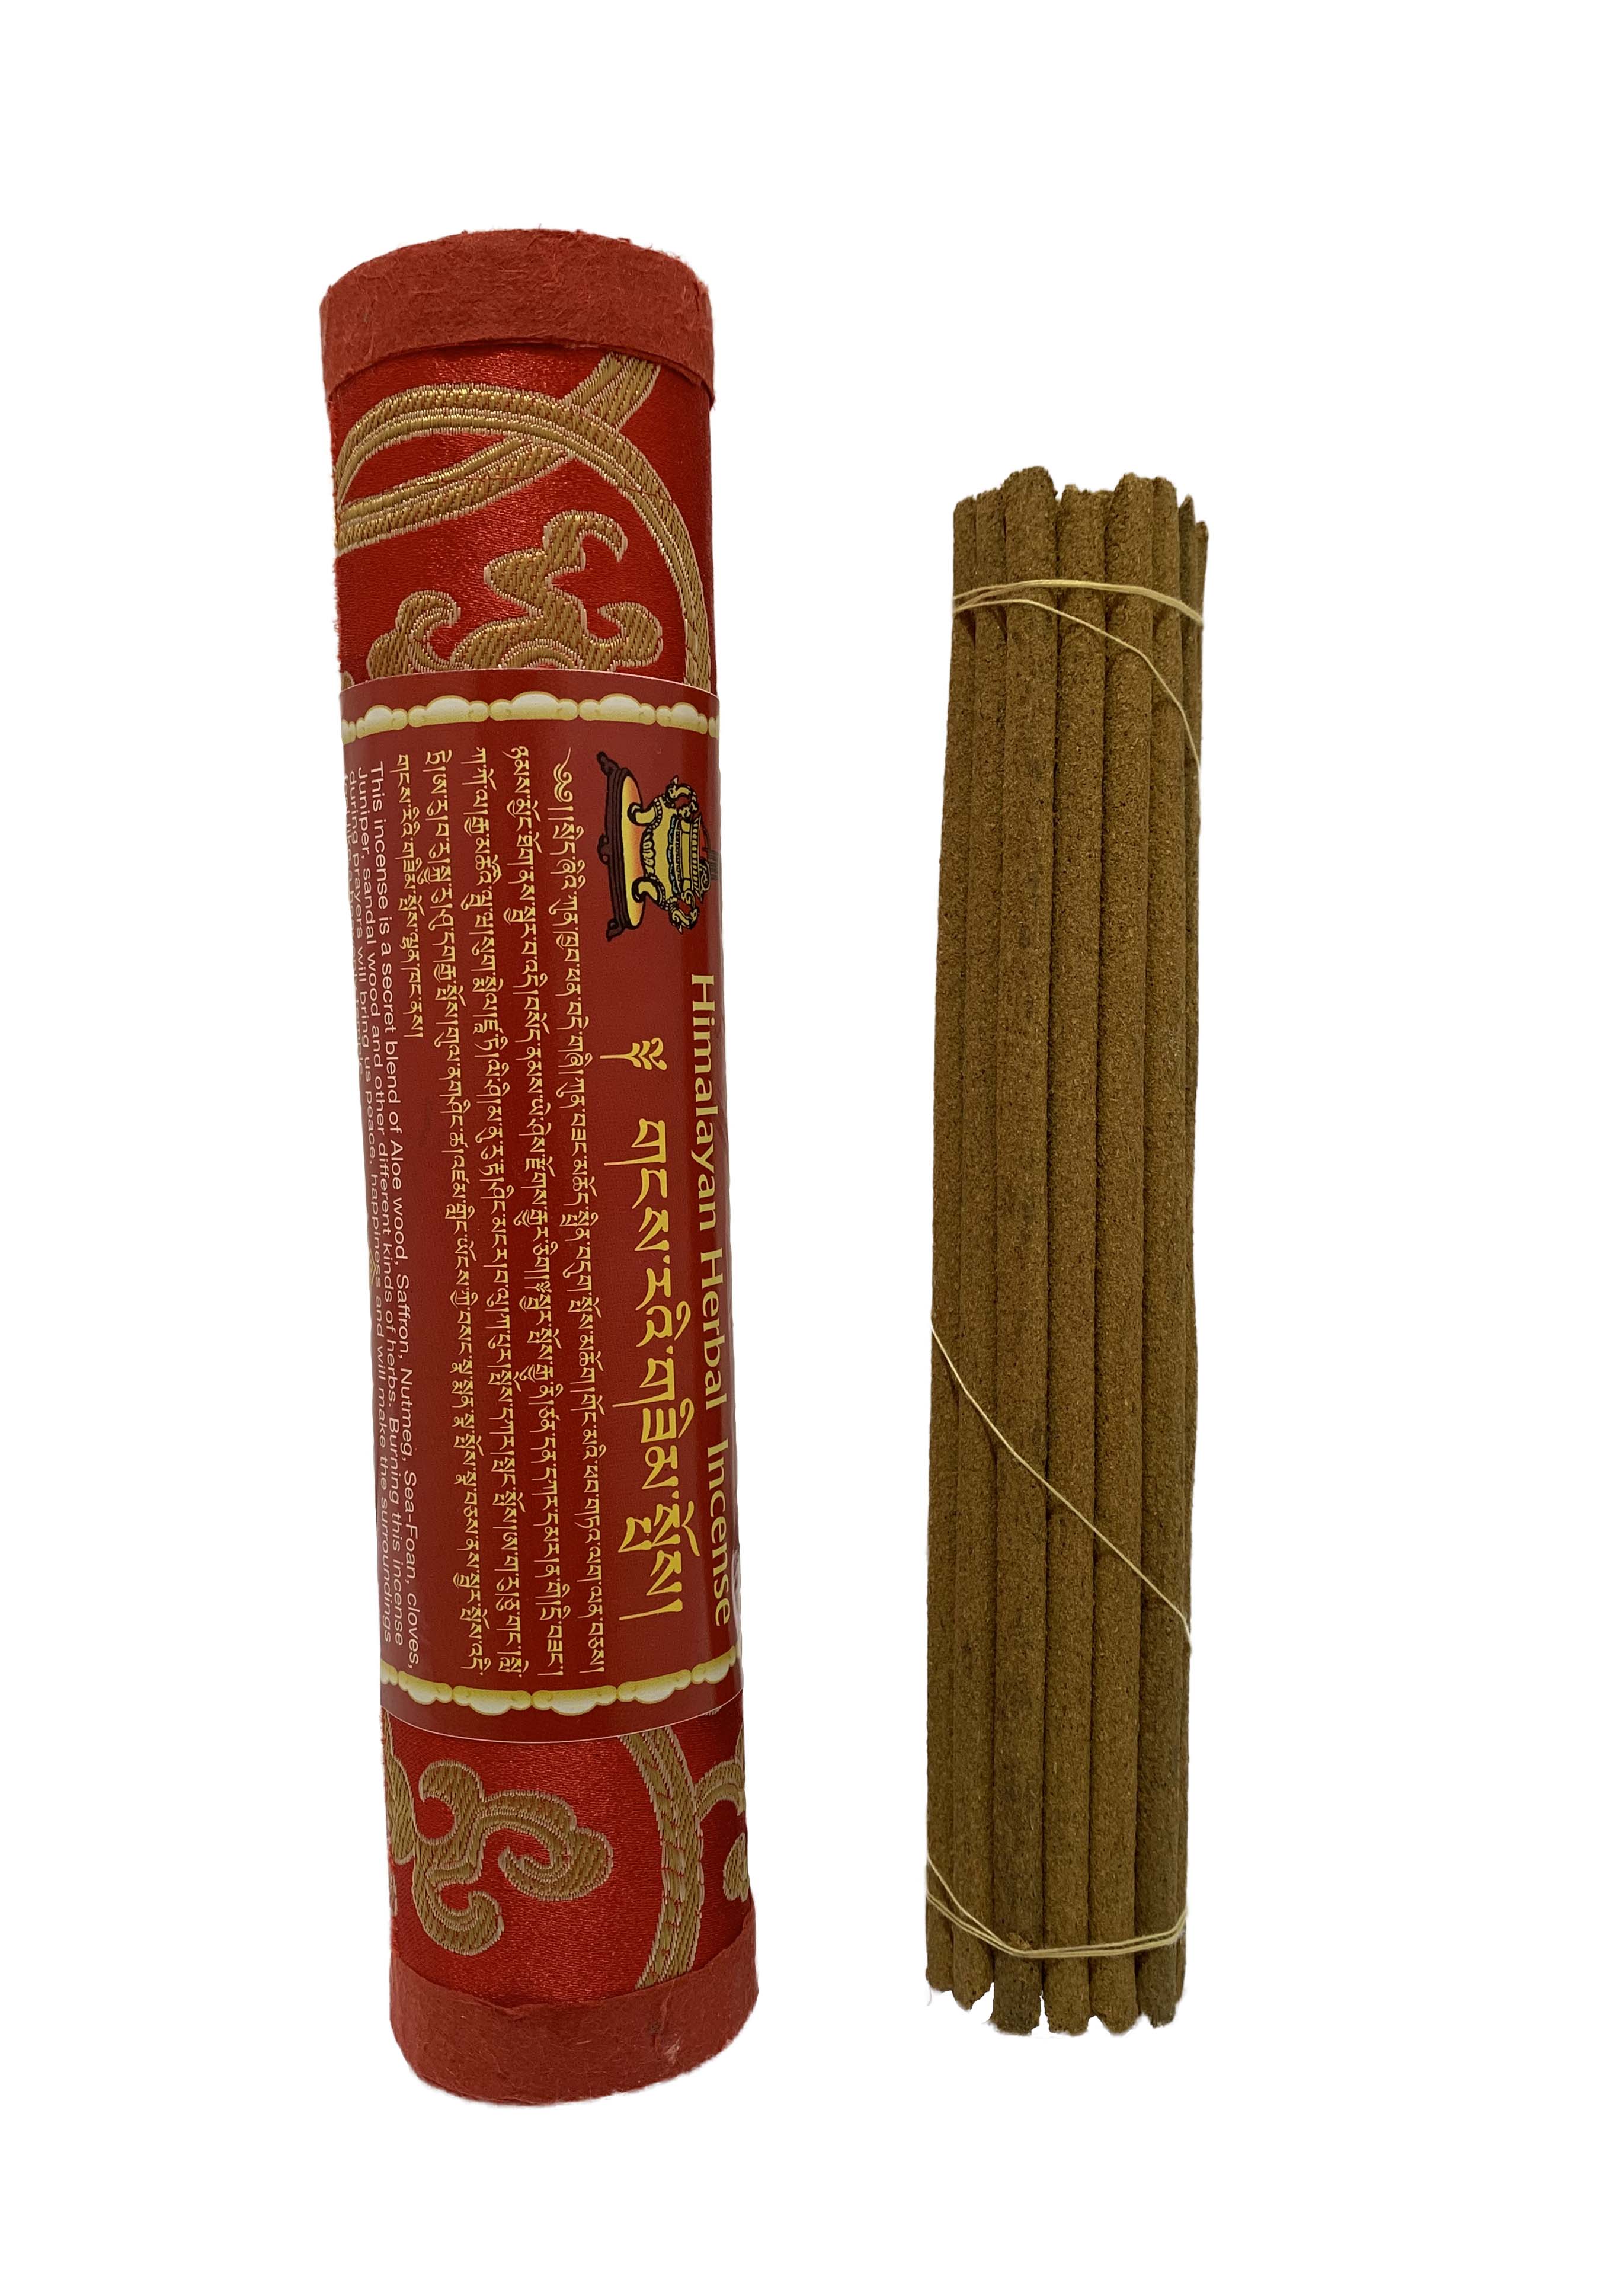 Himalayan Herbal Incense - Druk Sticks Red - 2 Pack